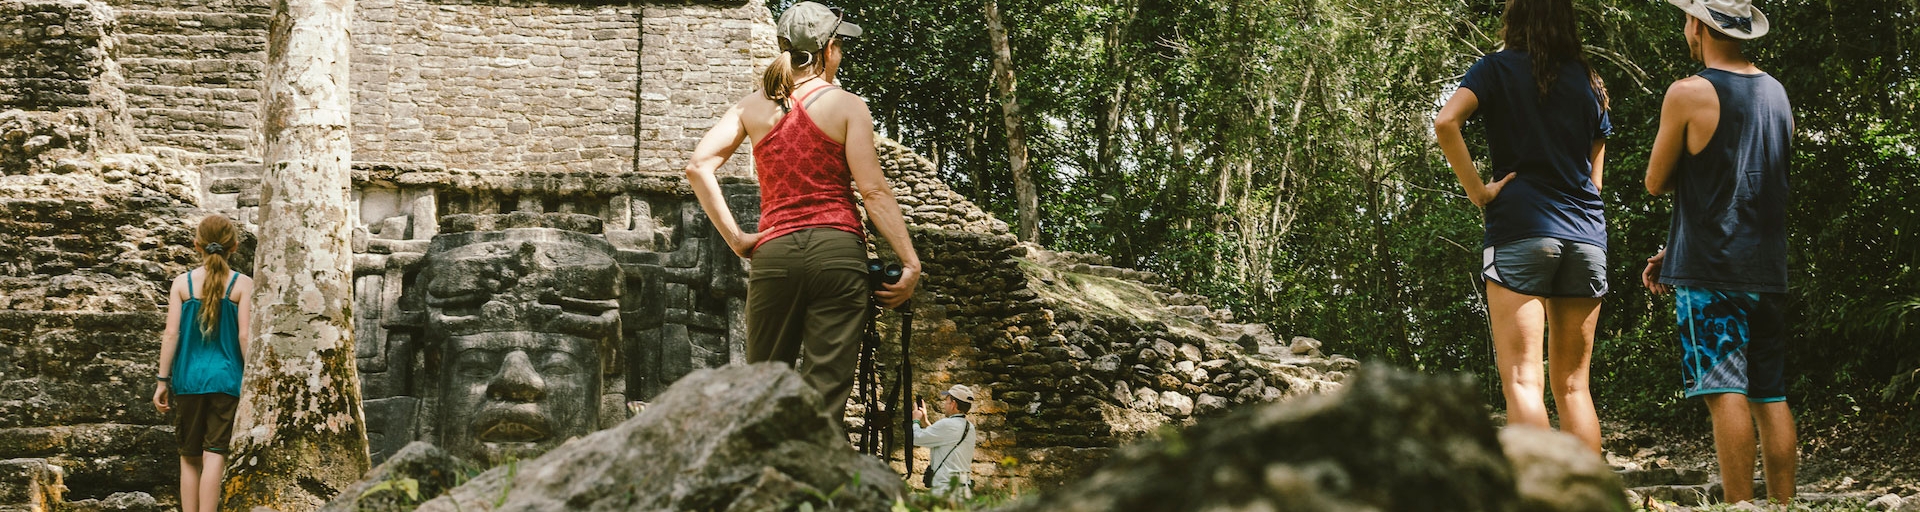 family visiting Belize mayan ruins